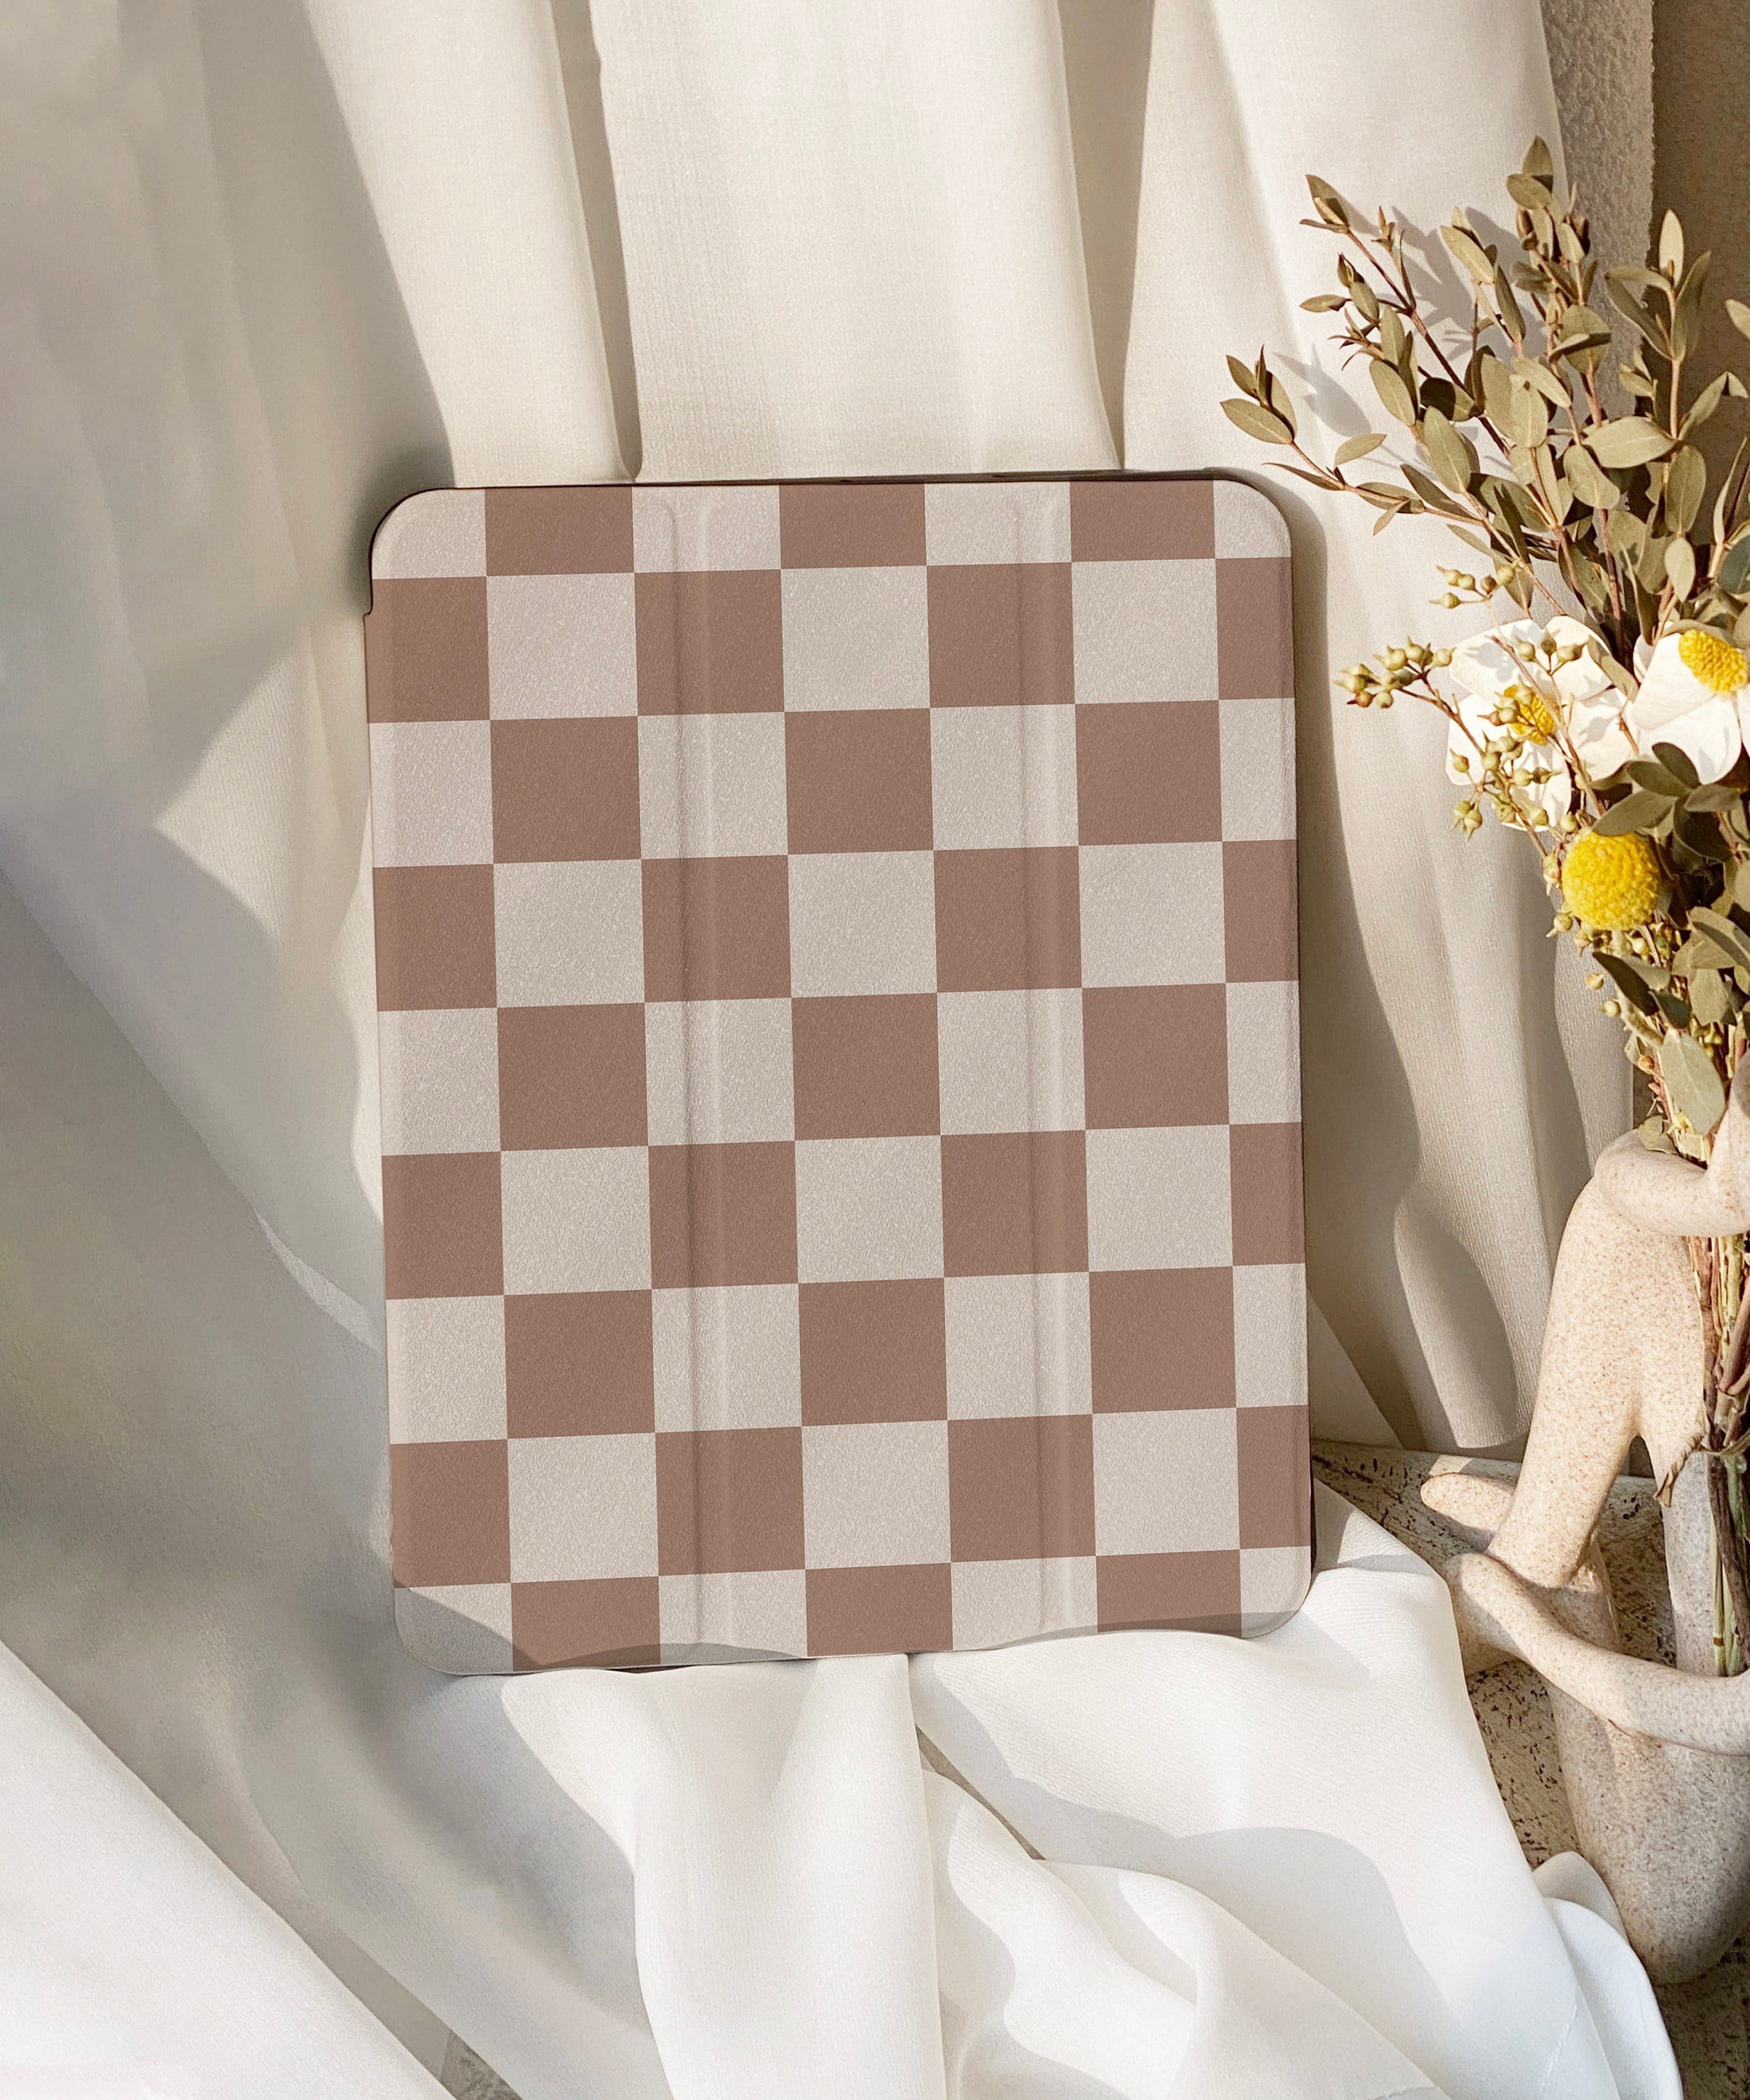 Darjeeling Limited Luggage Pattern Fan Art iPad Case & Skin for Sale by  WhatWhatDesigns